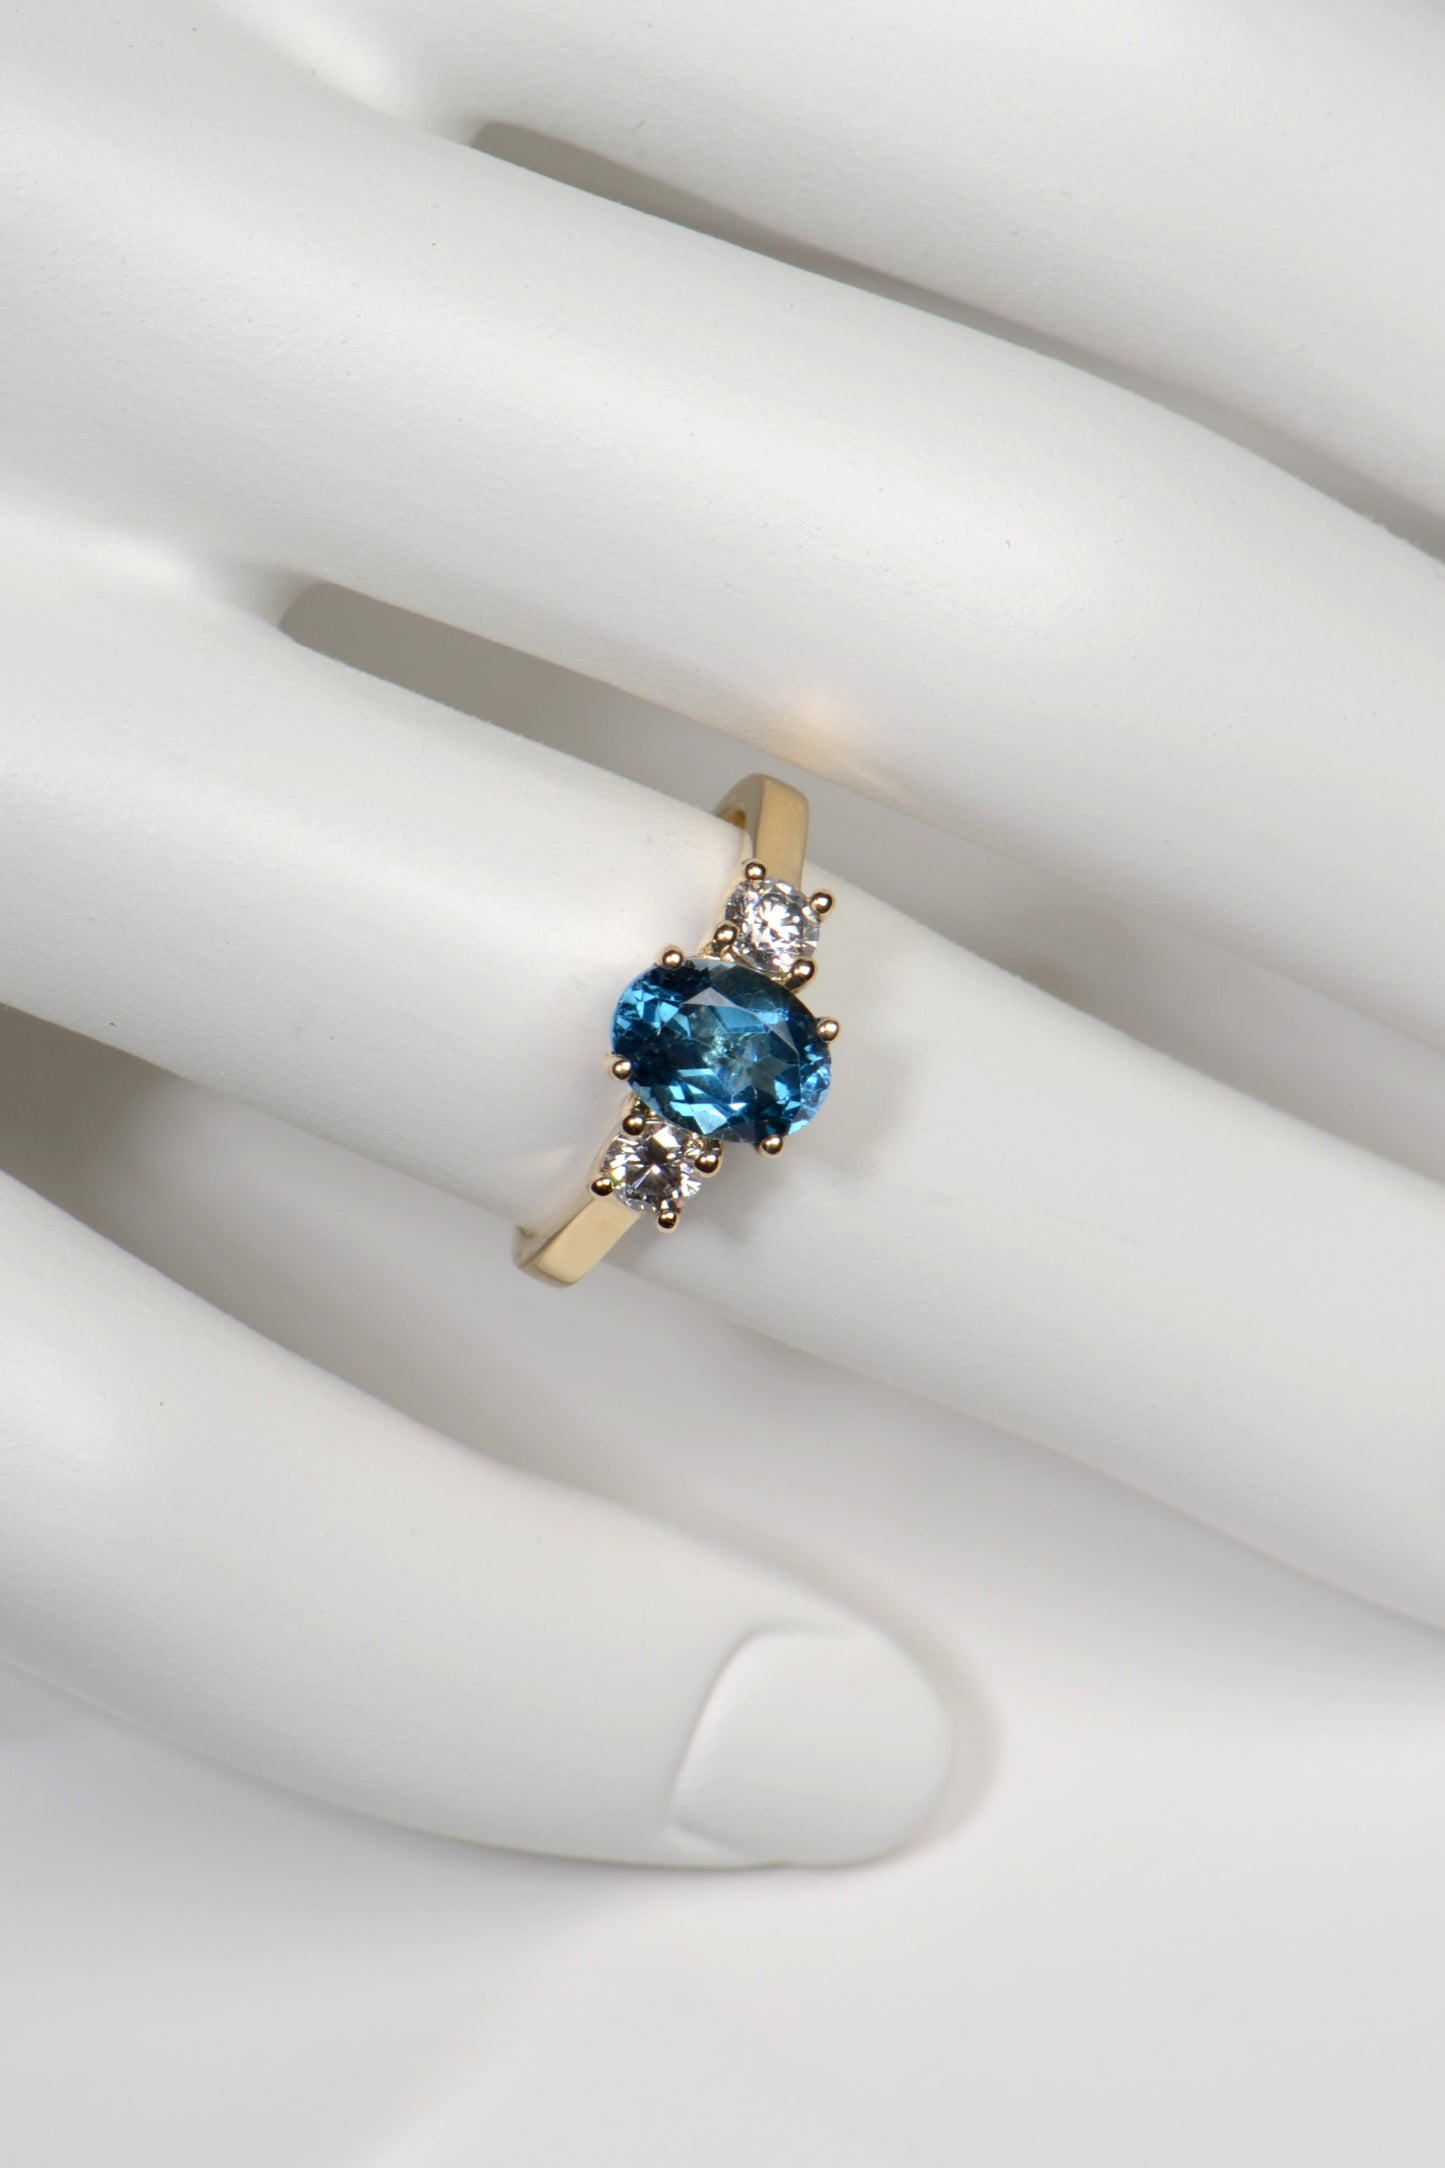 London blue topaz and diamond ring